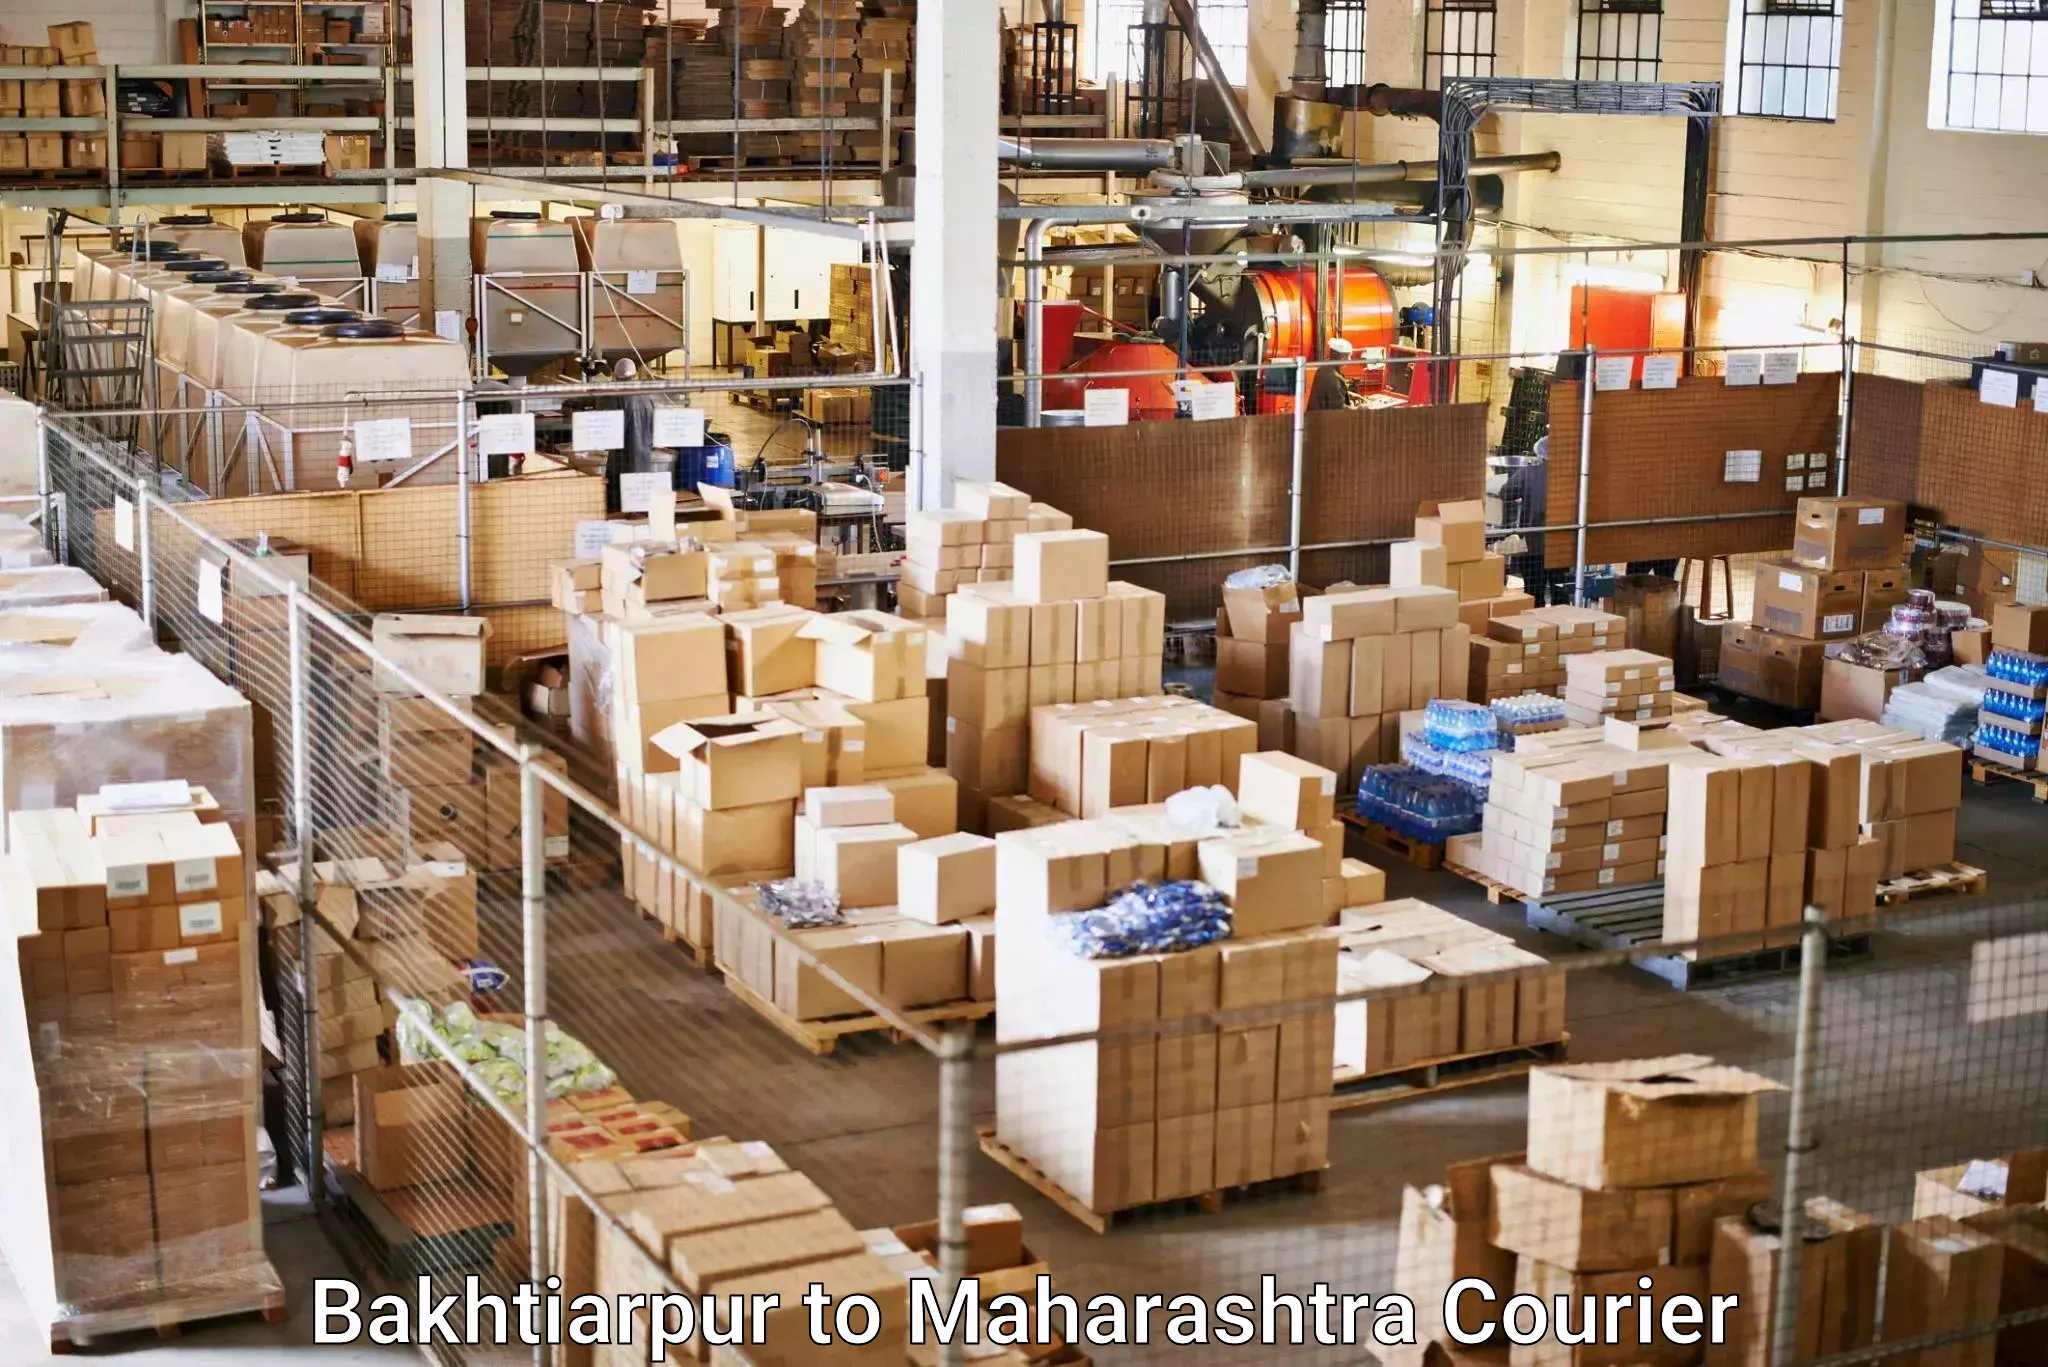 Global parcel delivery in Bakhtiarpur to Mumbai Port